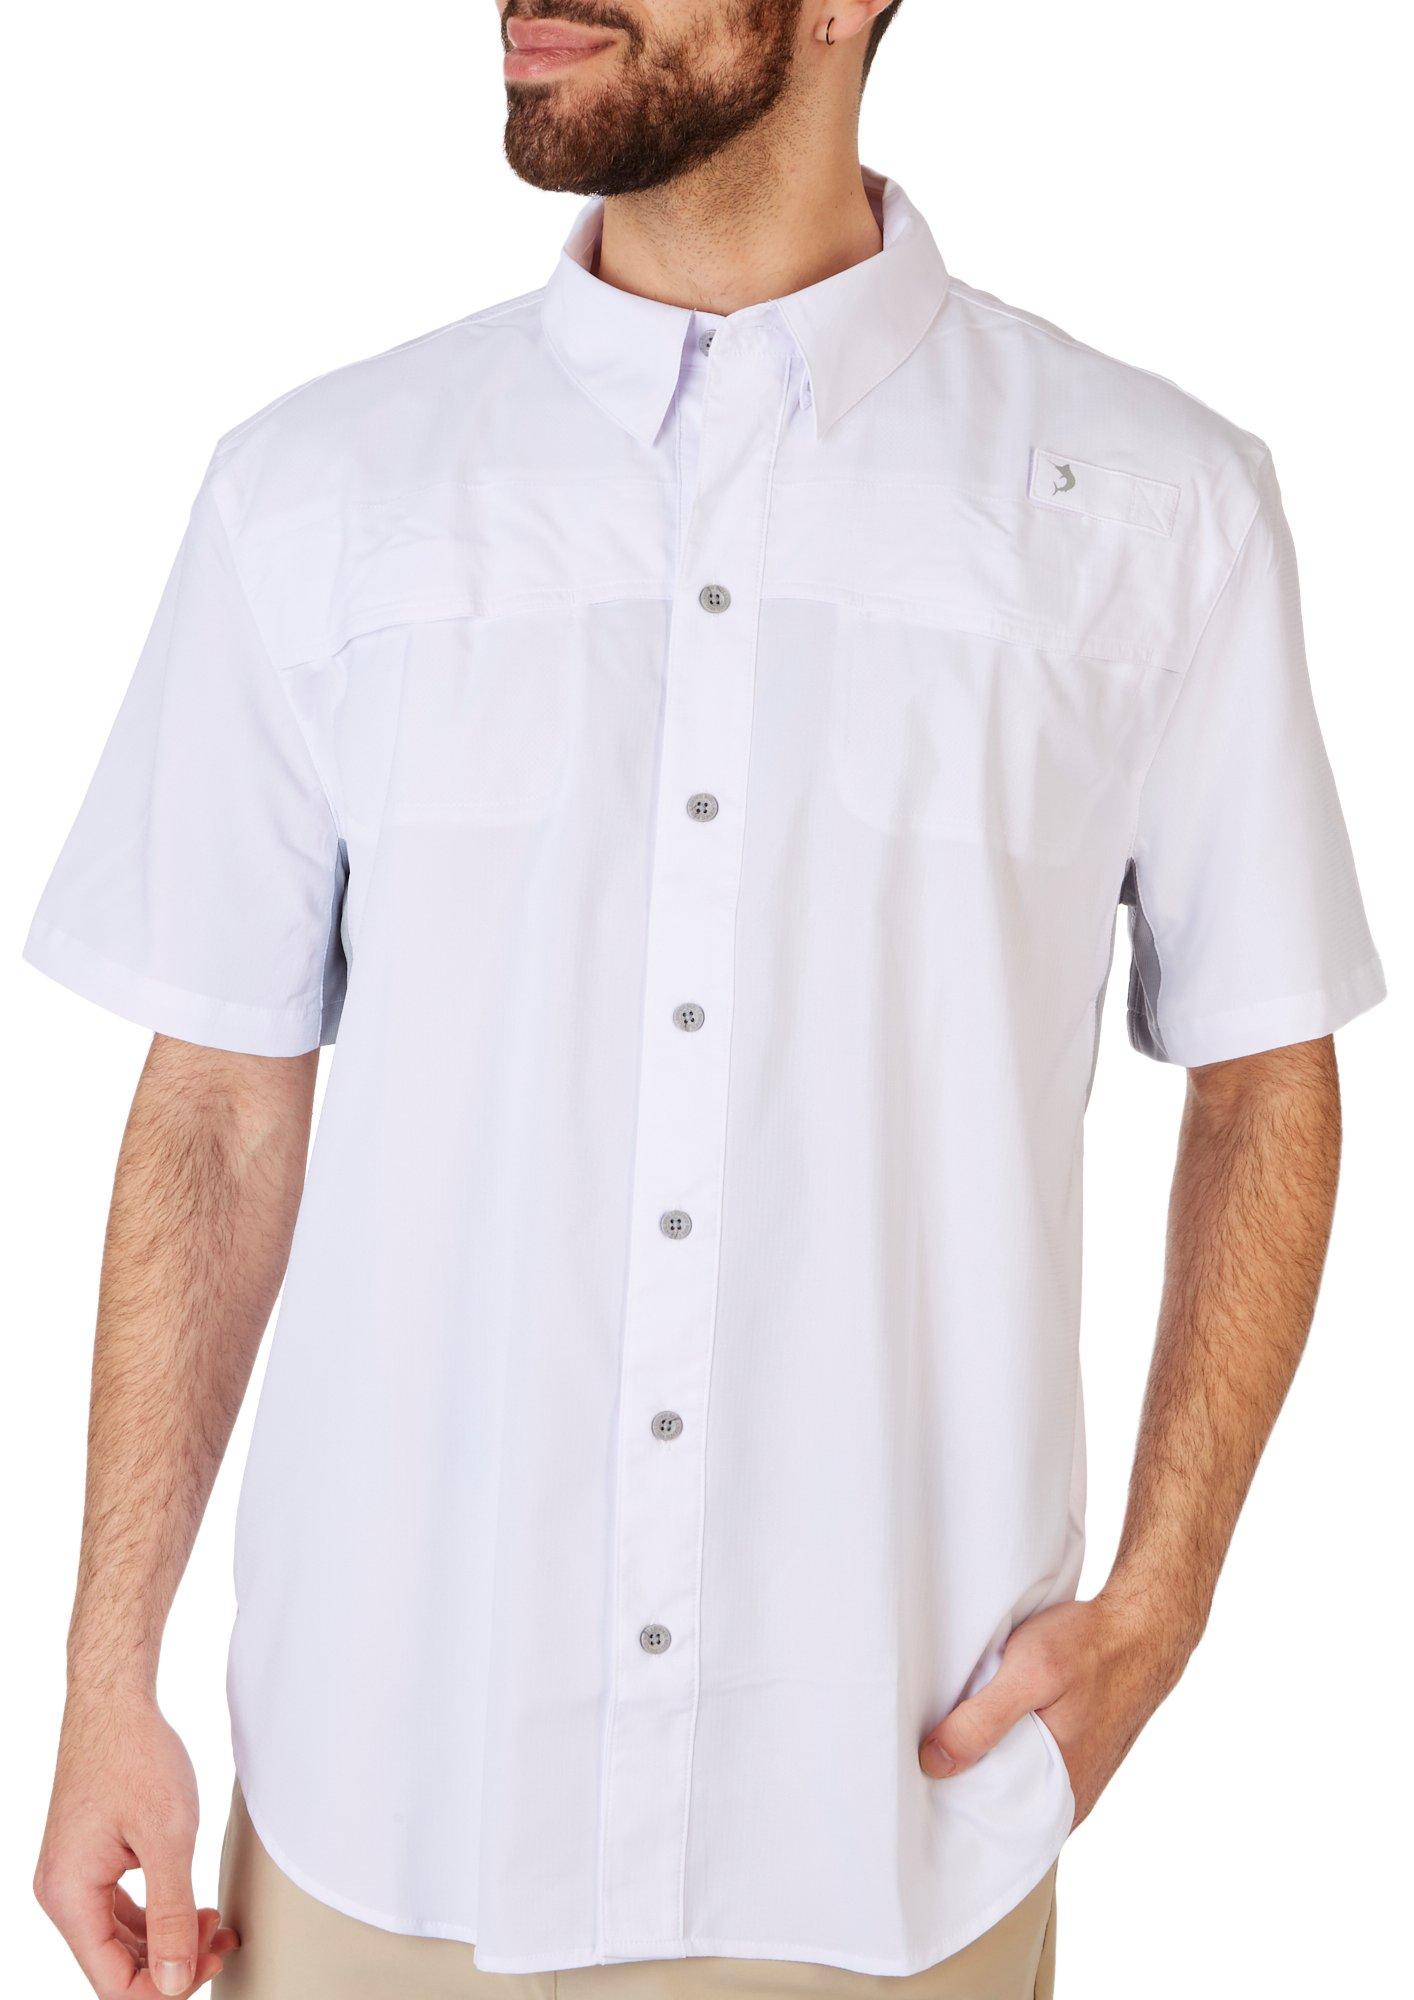 Reel Legends Mens Solid Mariner II Short Sleeve Shirt - Bright White - X-Large